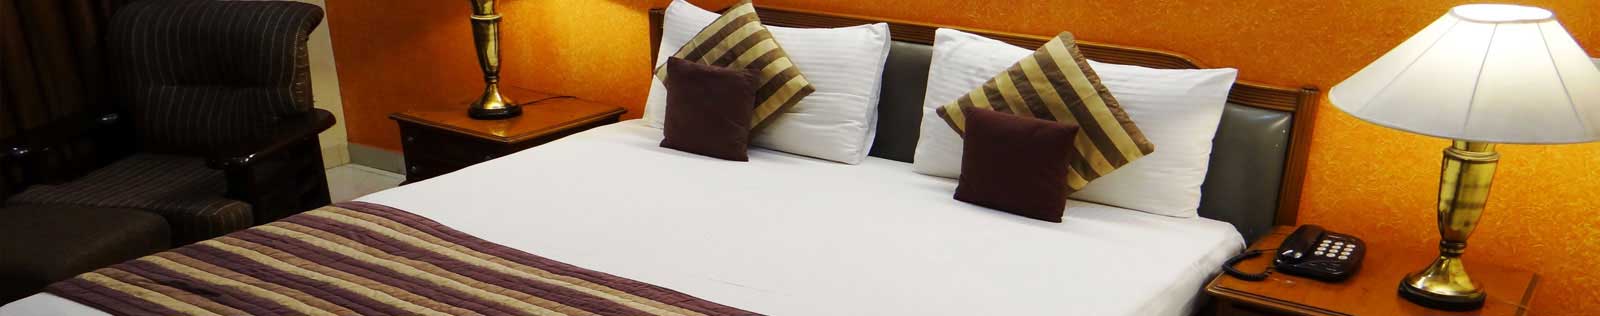 Luxury Hotel Deals in Gr. Noida